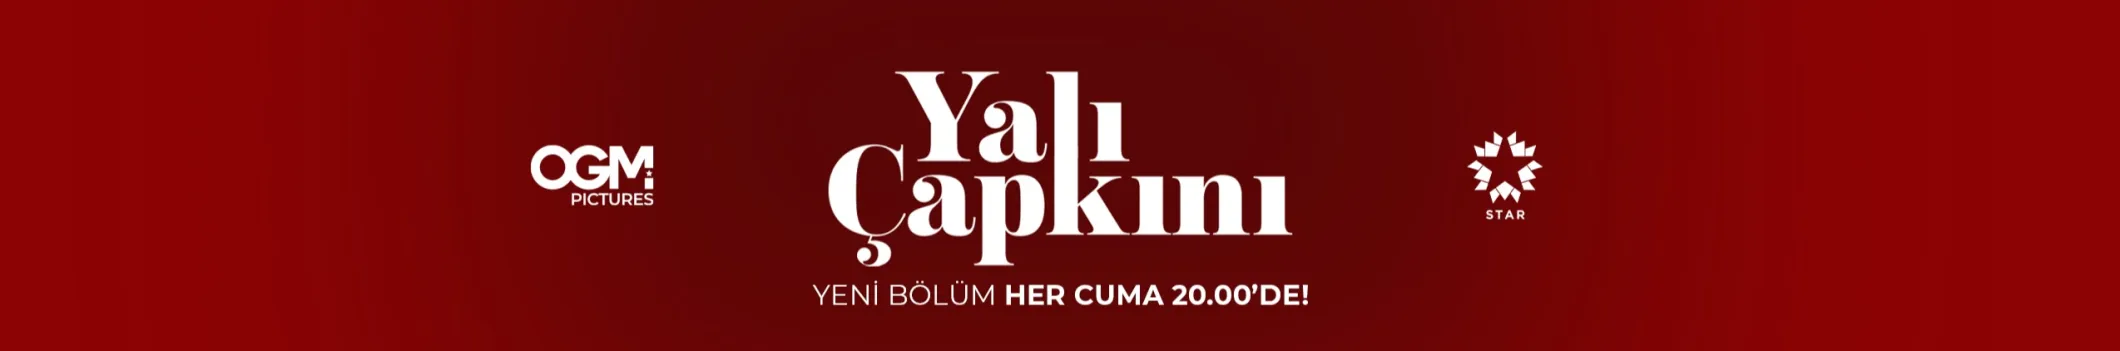 Yali Capkini English subtitles